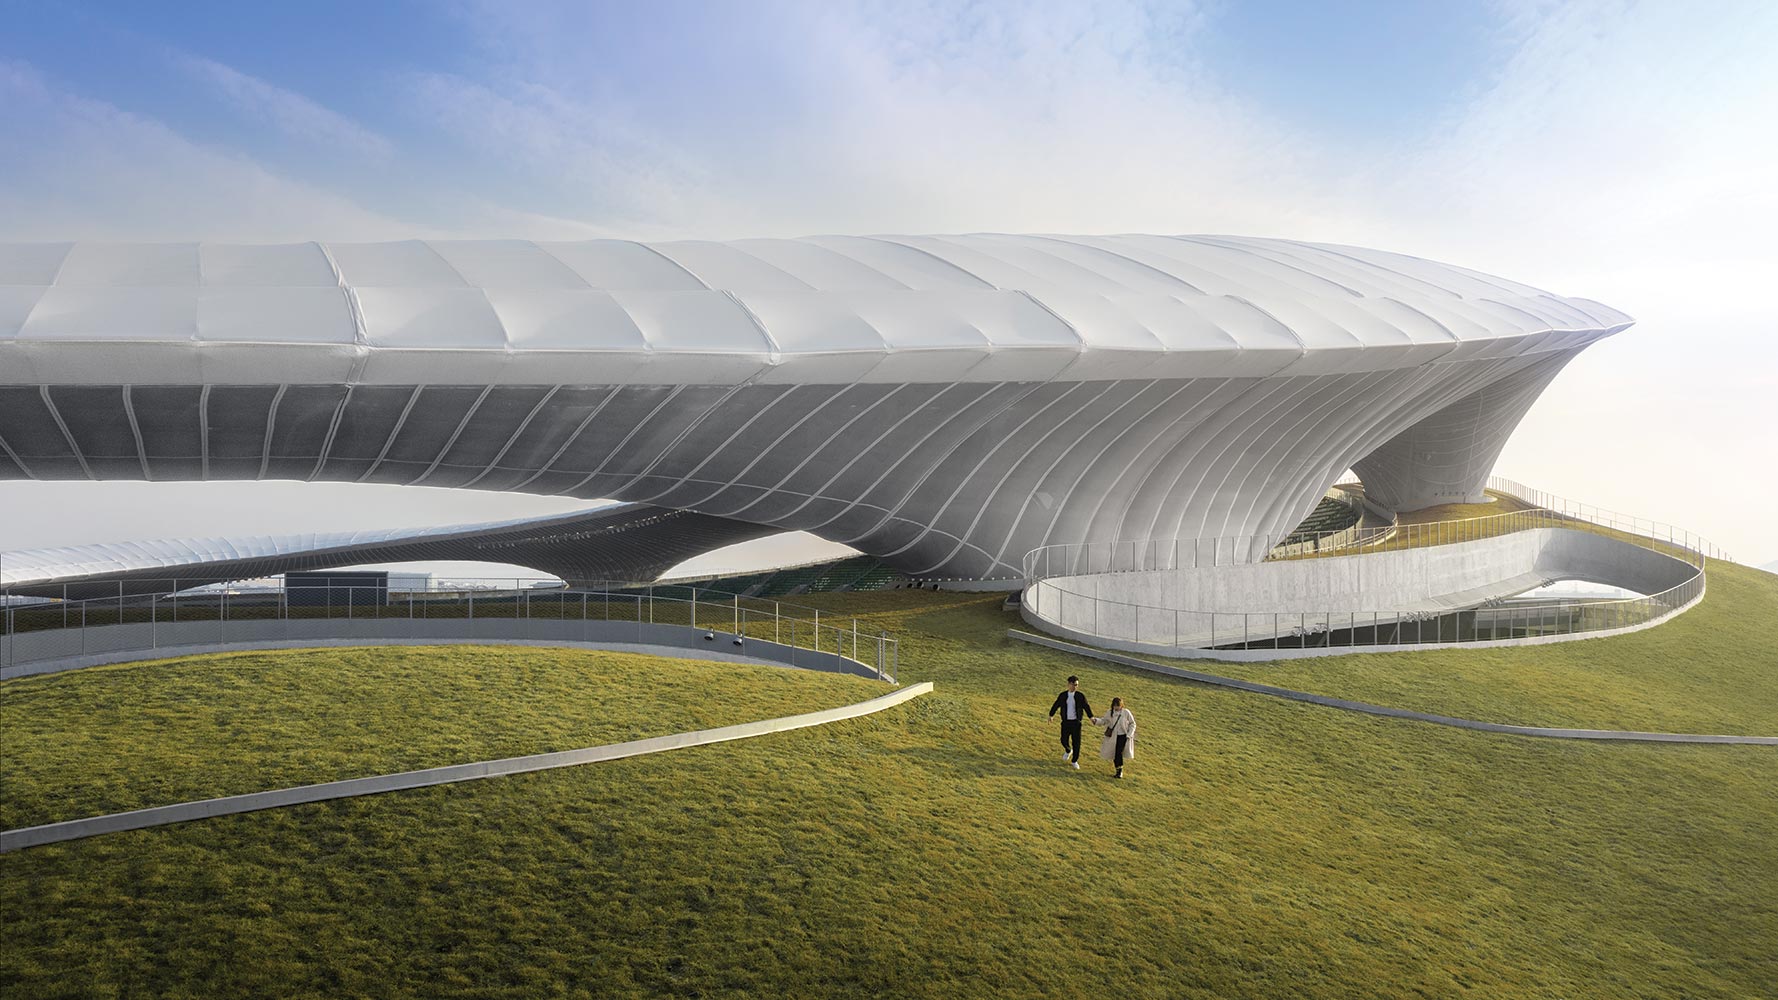 Quzhou Stadium by MAD Architects.